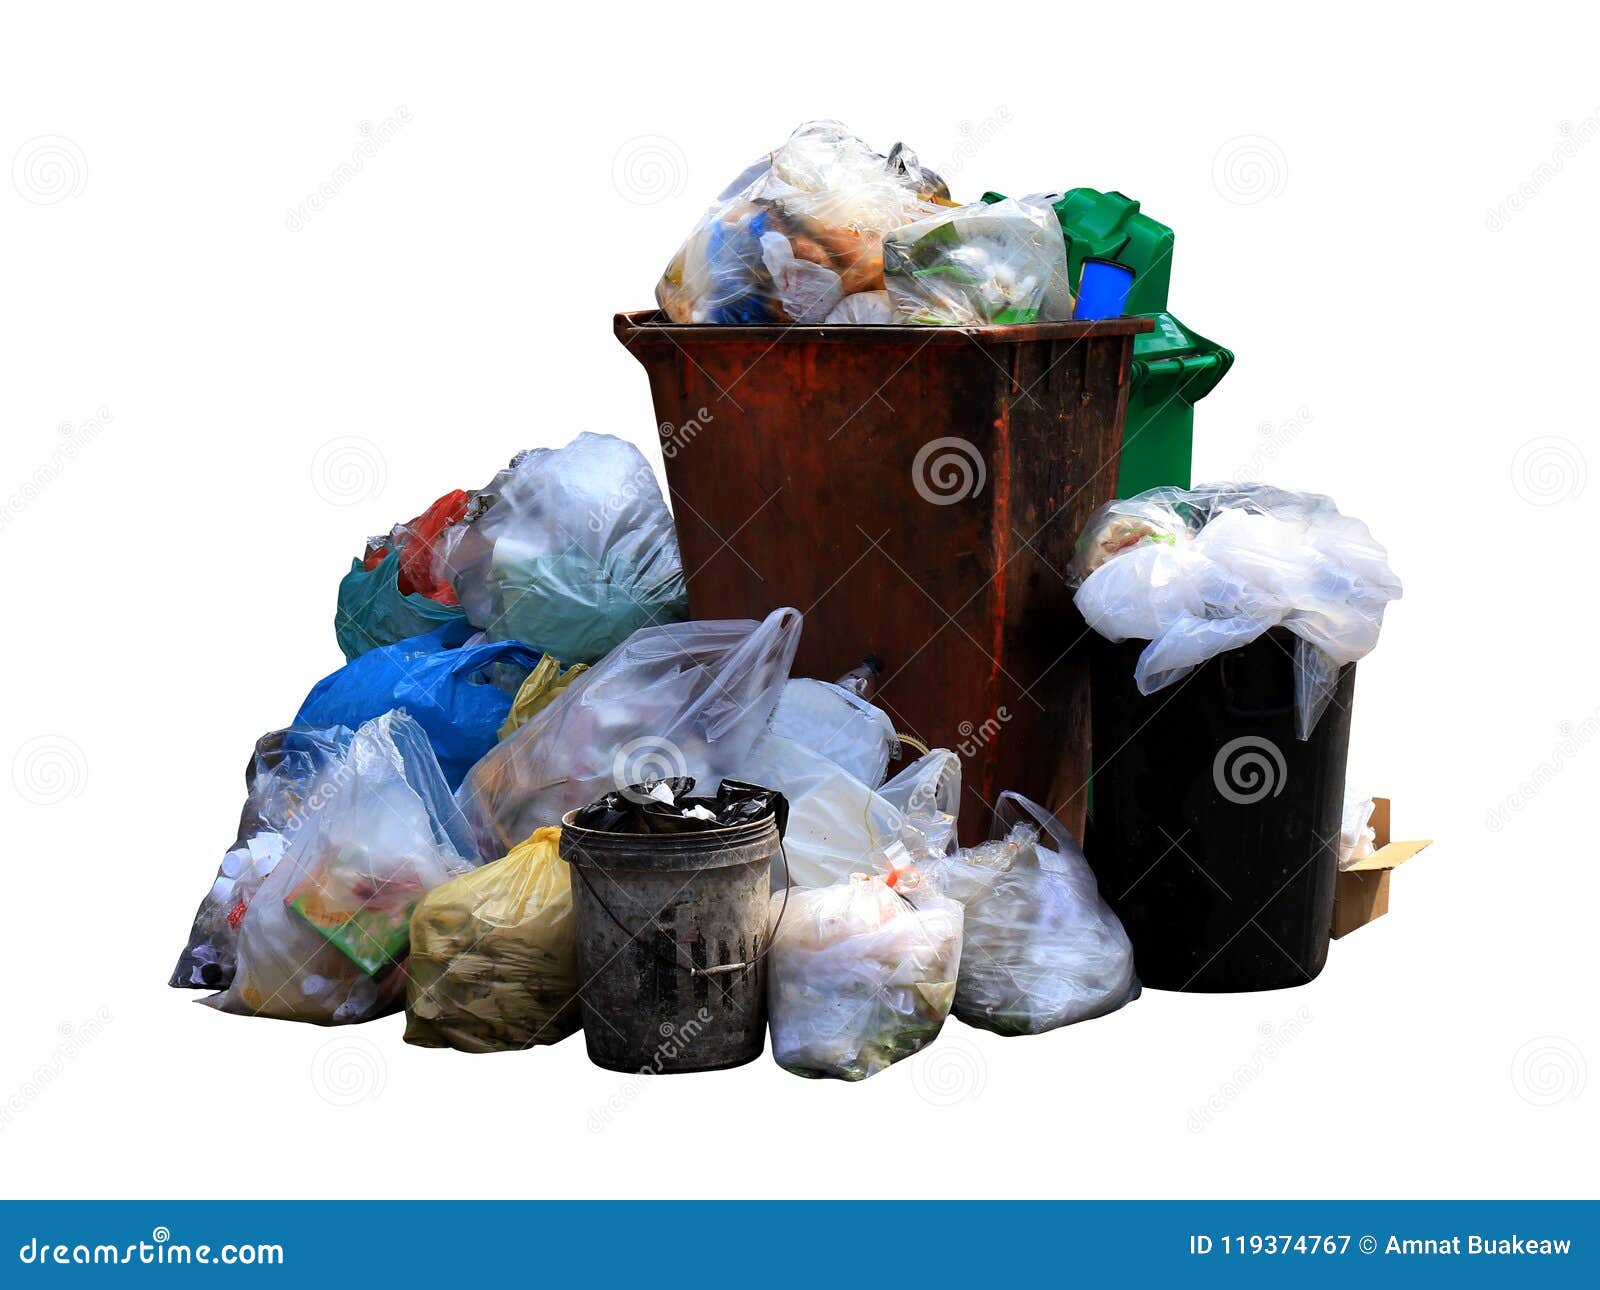 https://thumbs.dreamstime.com/z/bin-trash-bag-plastic-garbage-bag-pile-pollution-waste-plastic-pile-bin-trash-junk-dirty-garbage-bag-many-isolated-119374767.jpg